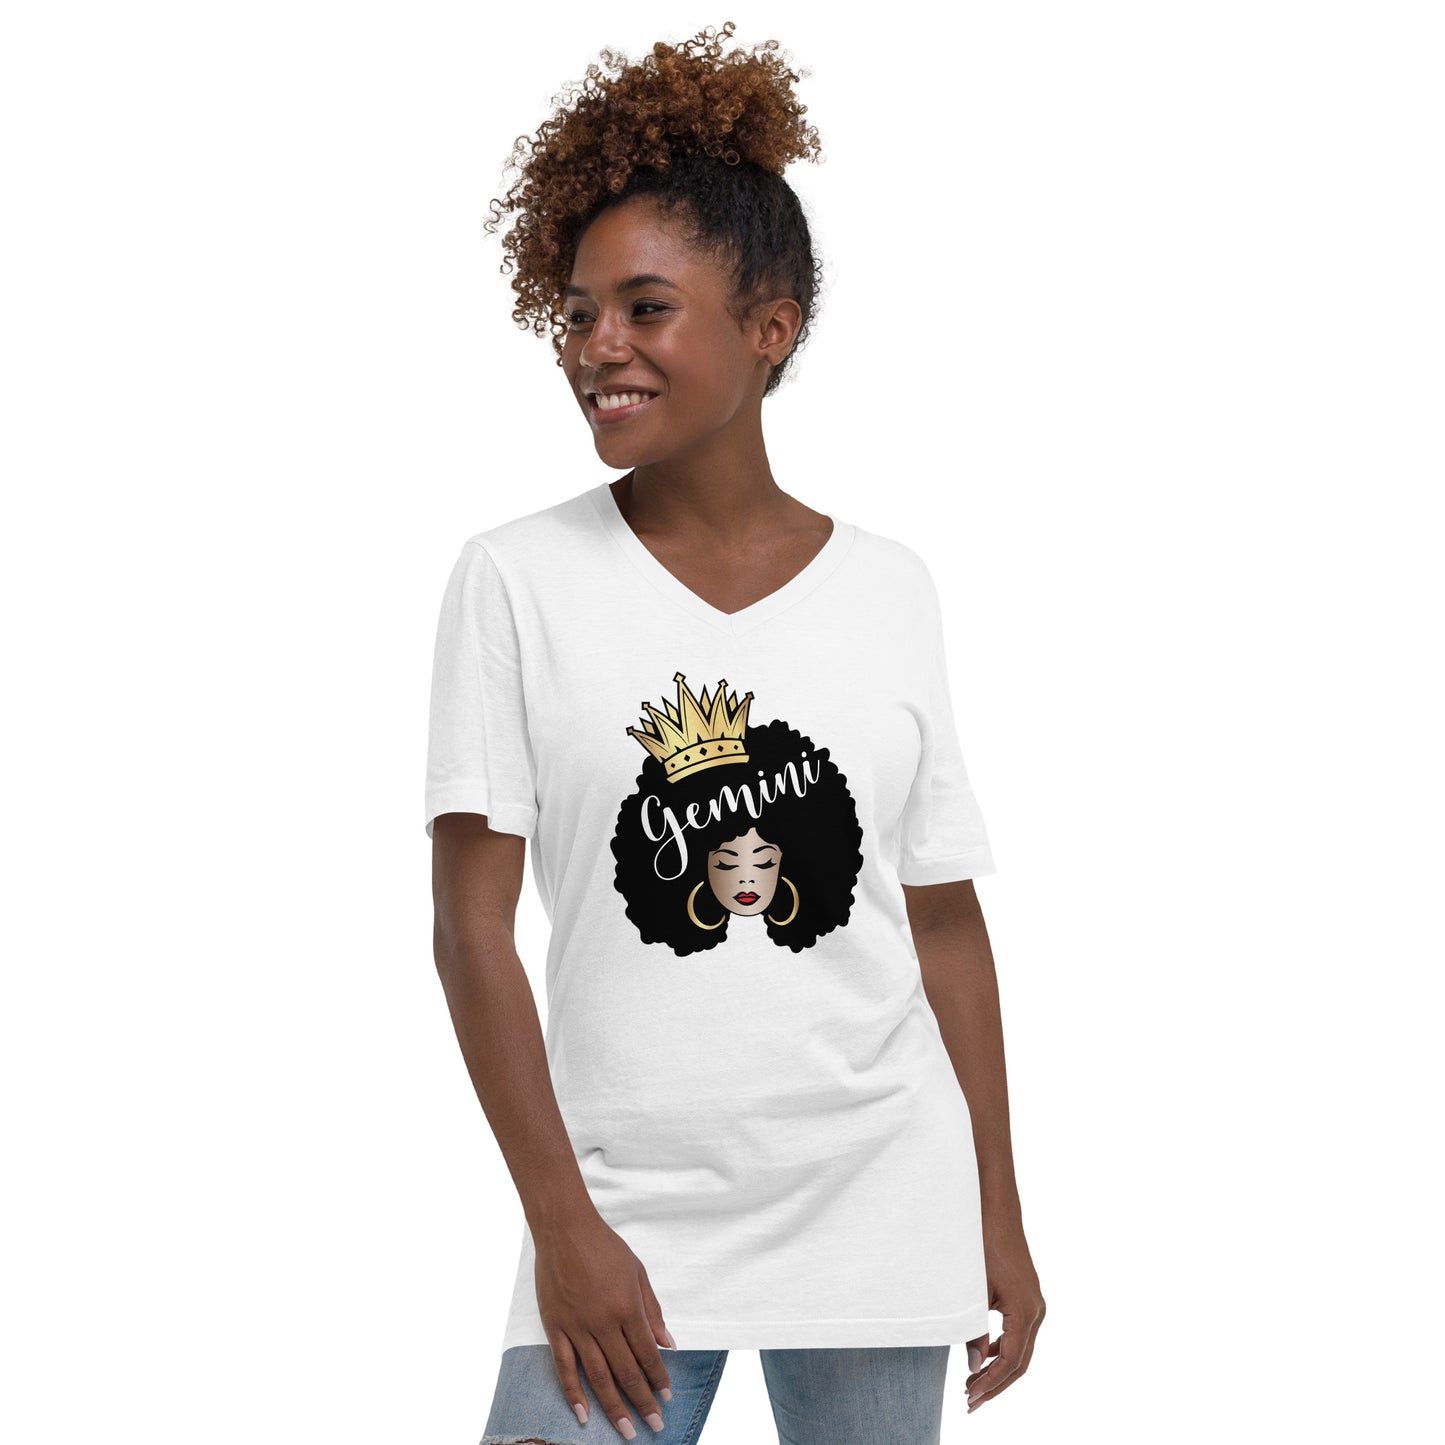 Women's Short Sleeve V-Neck T-Shirt - Gemini Afro Queen